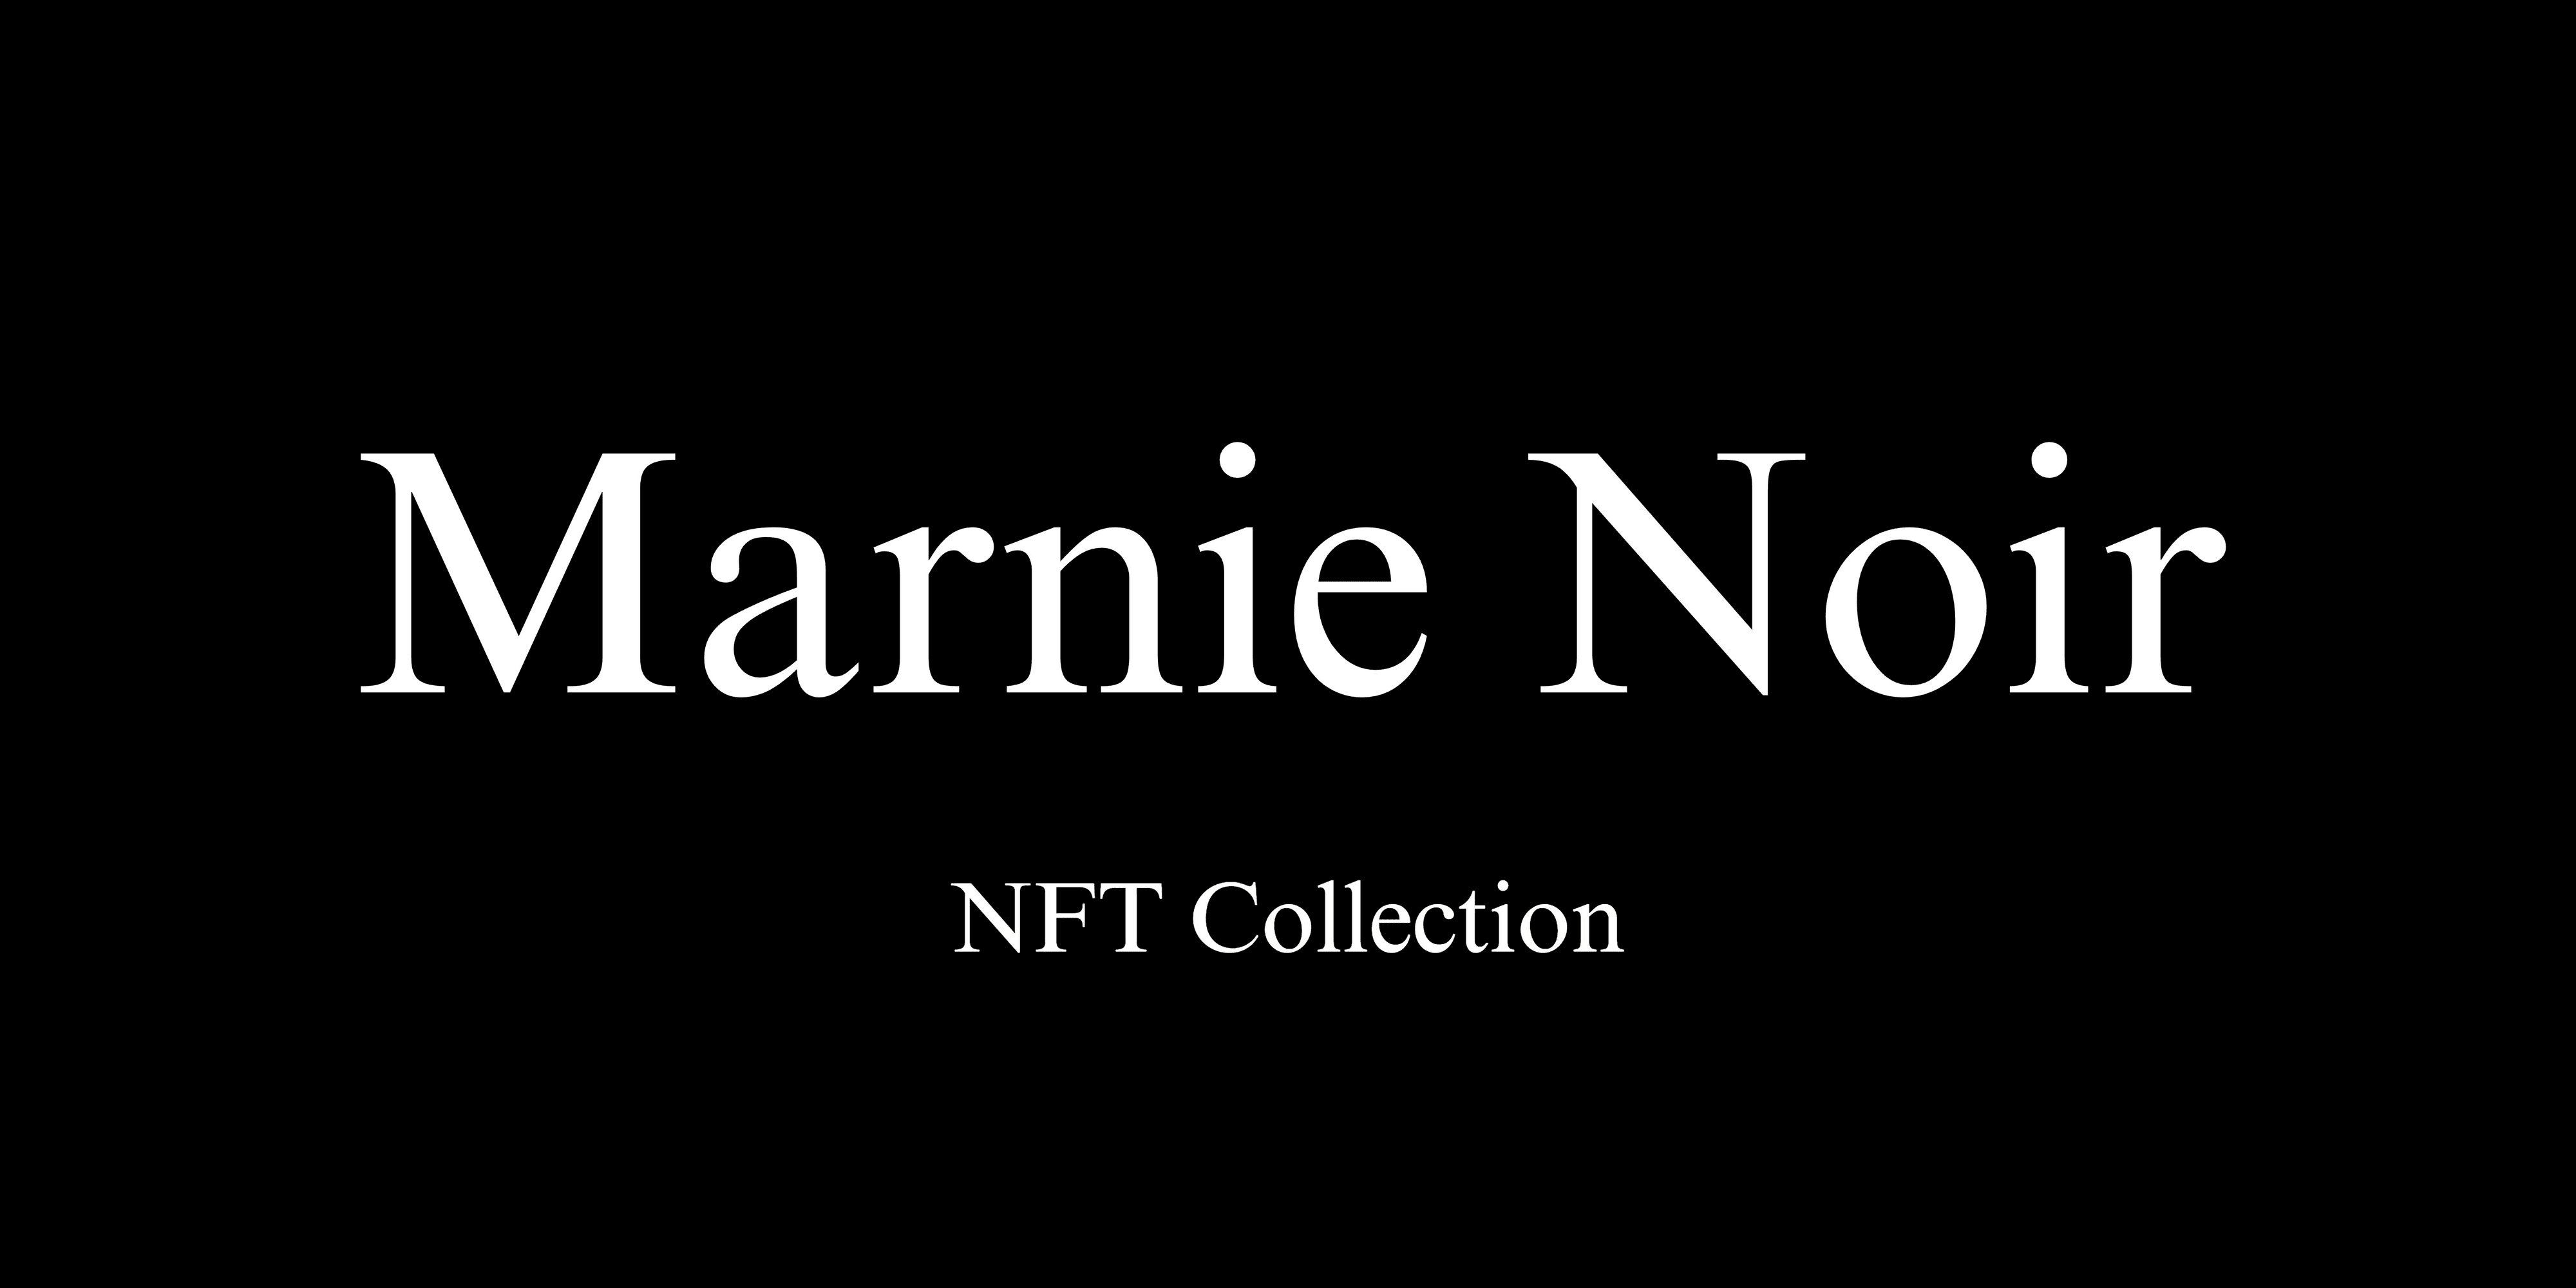 Marnie_Noir banner